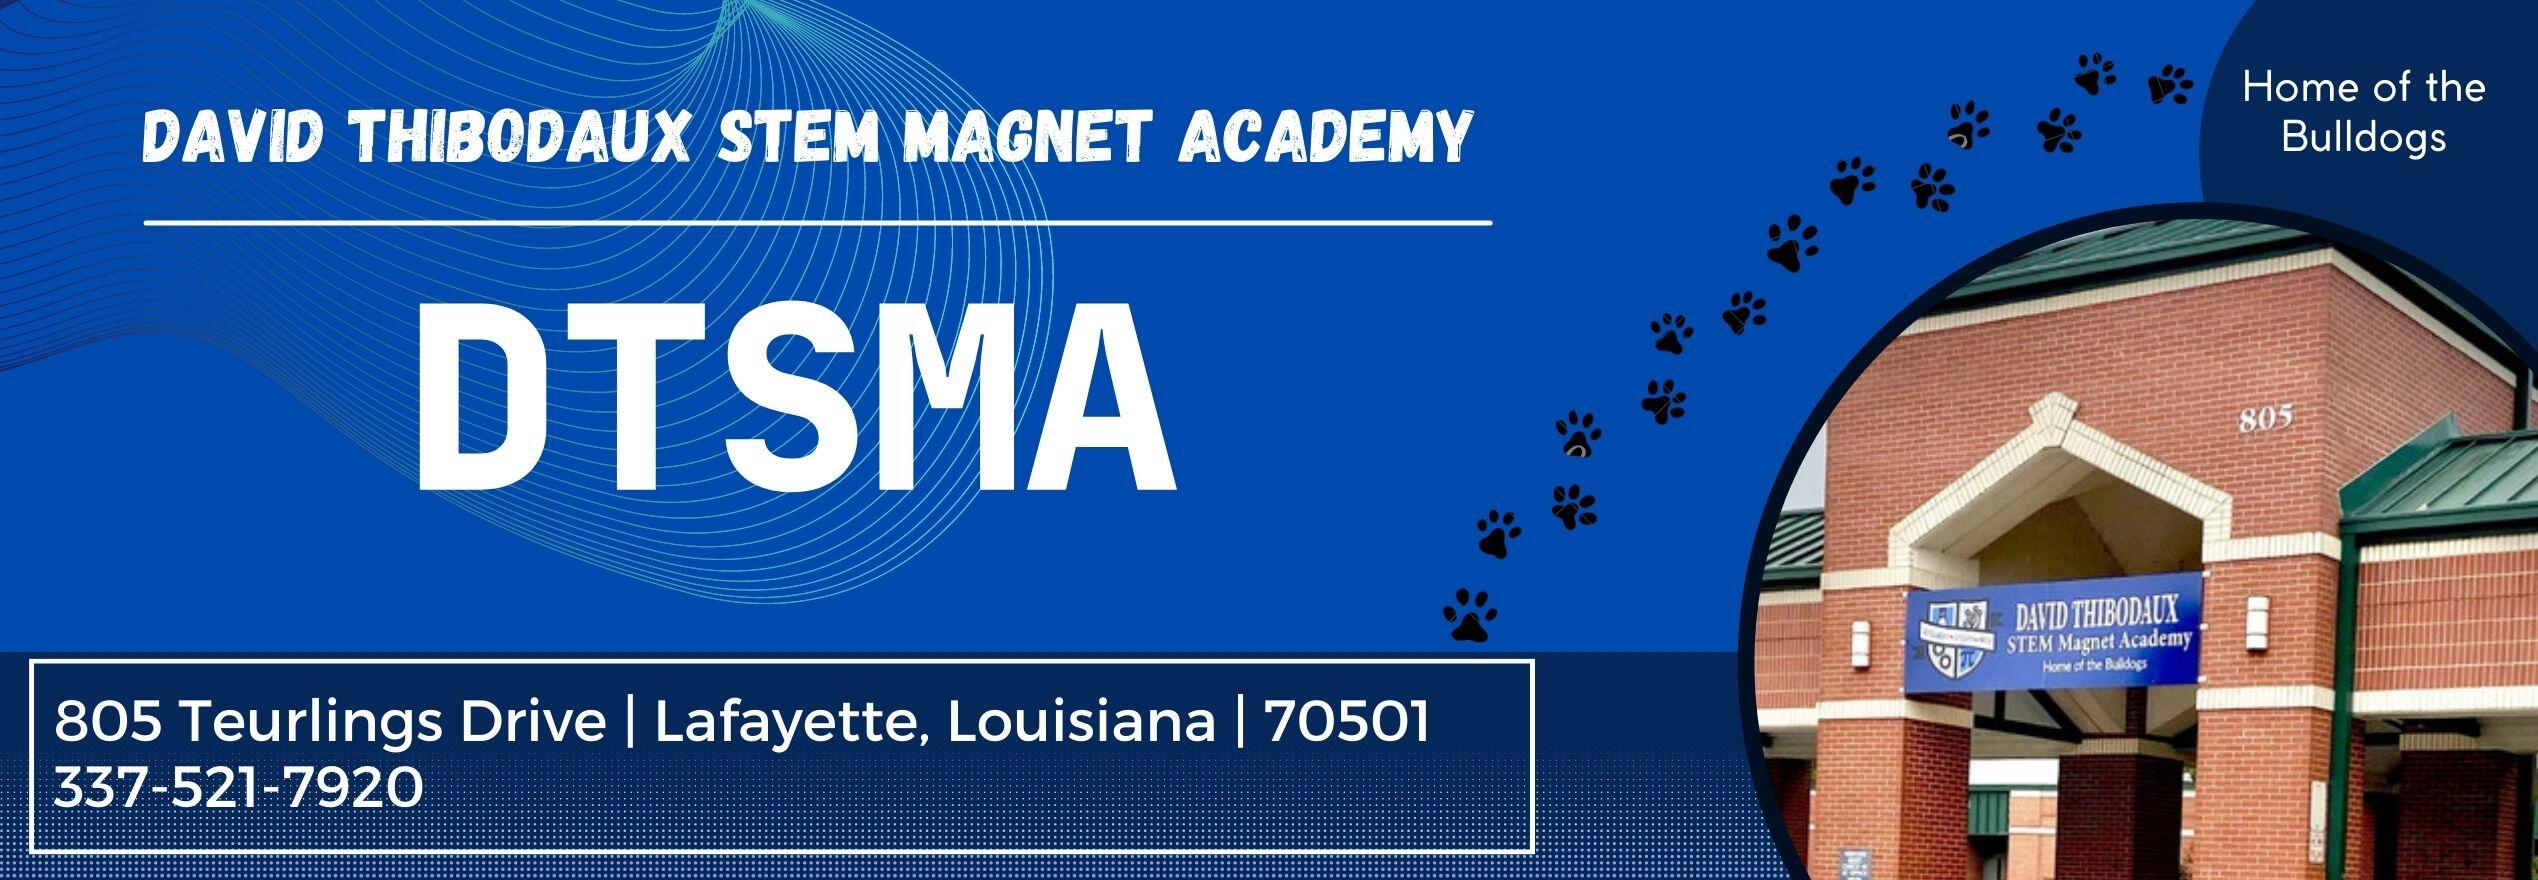 David Thibodaux STEM Magnet Academy